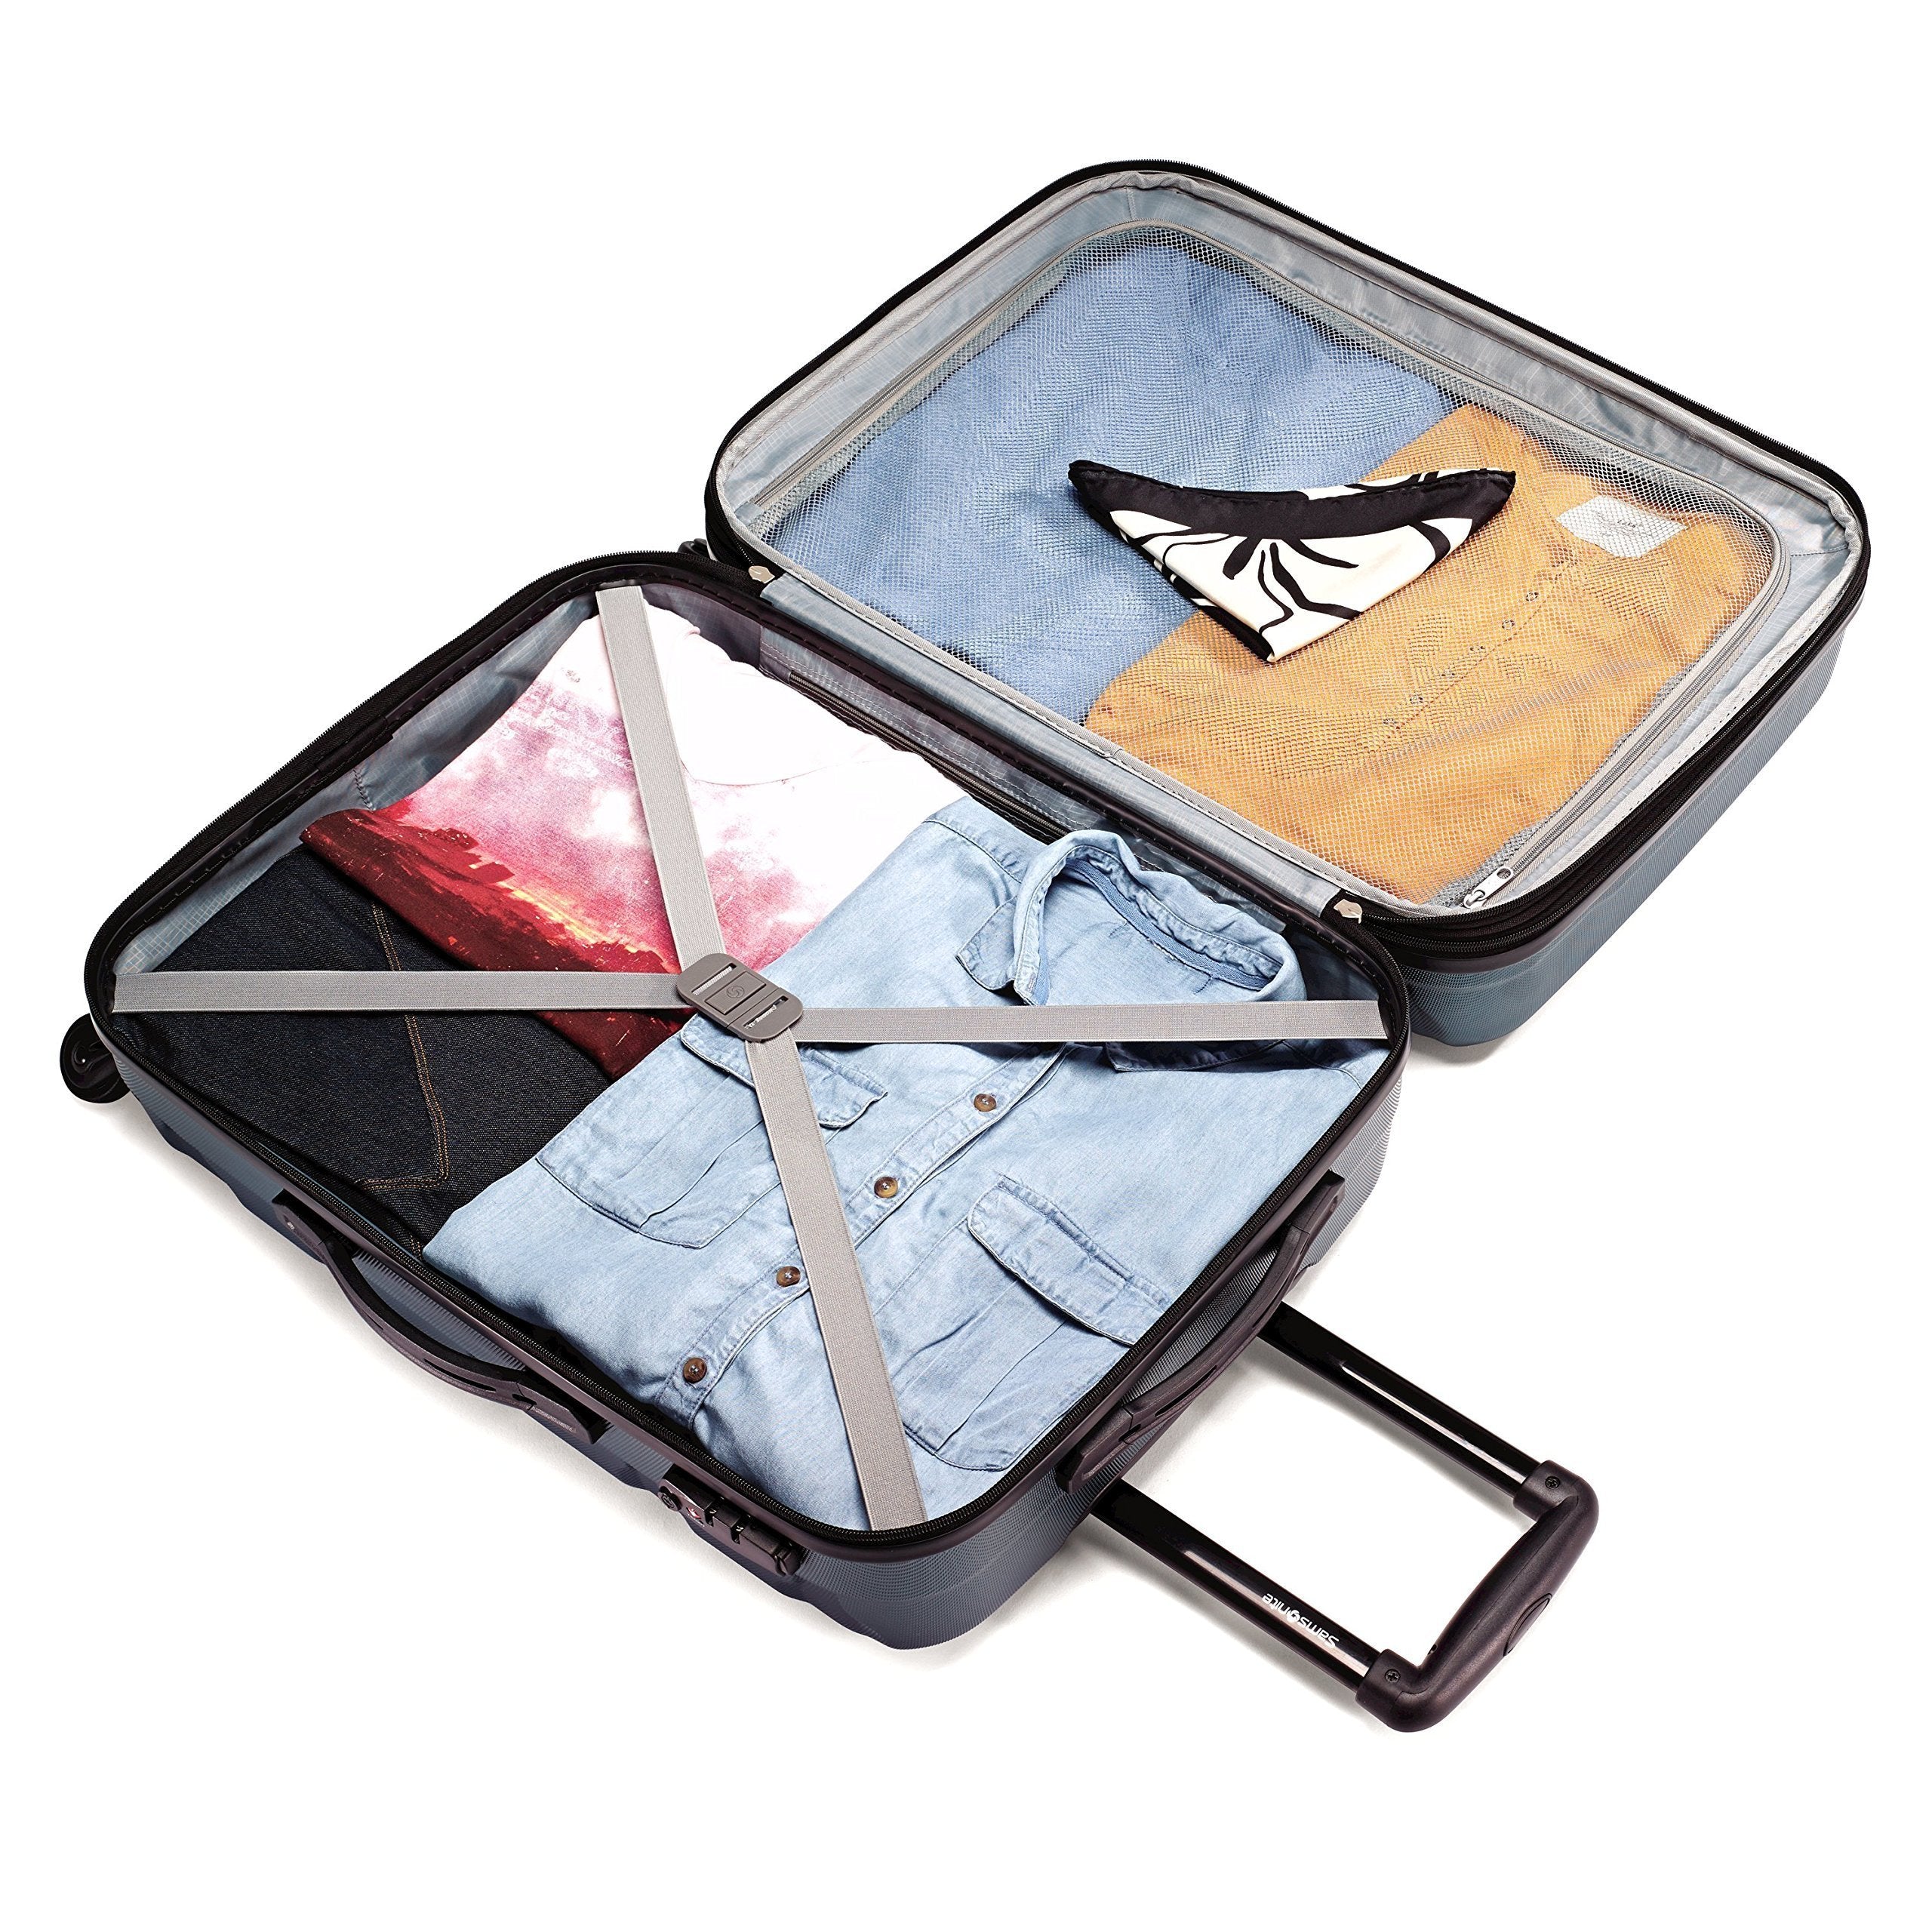 Samsonite Omni Pc Hardside Expandable Luggage with Spinner Wheels U14